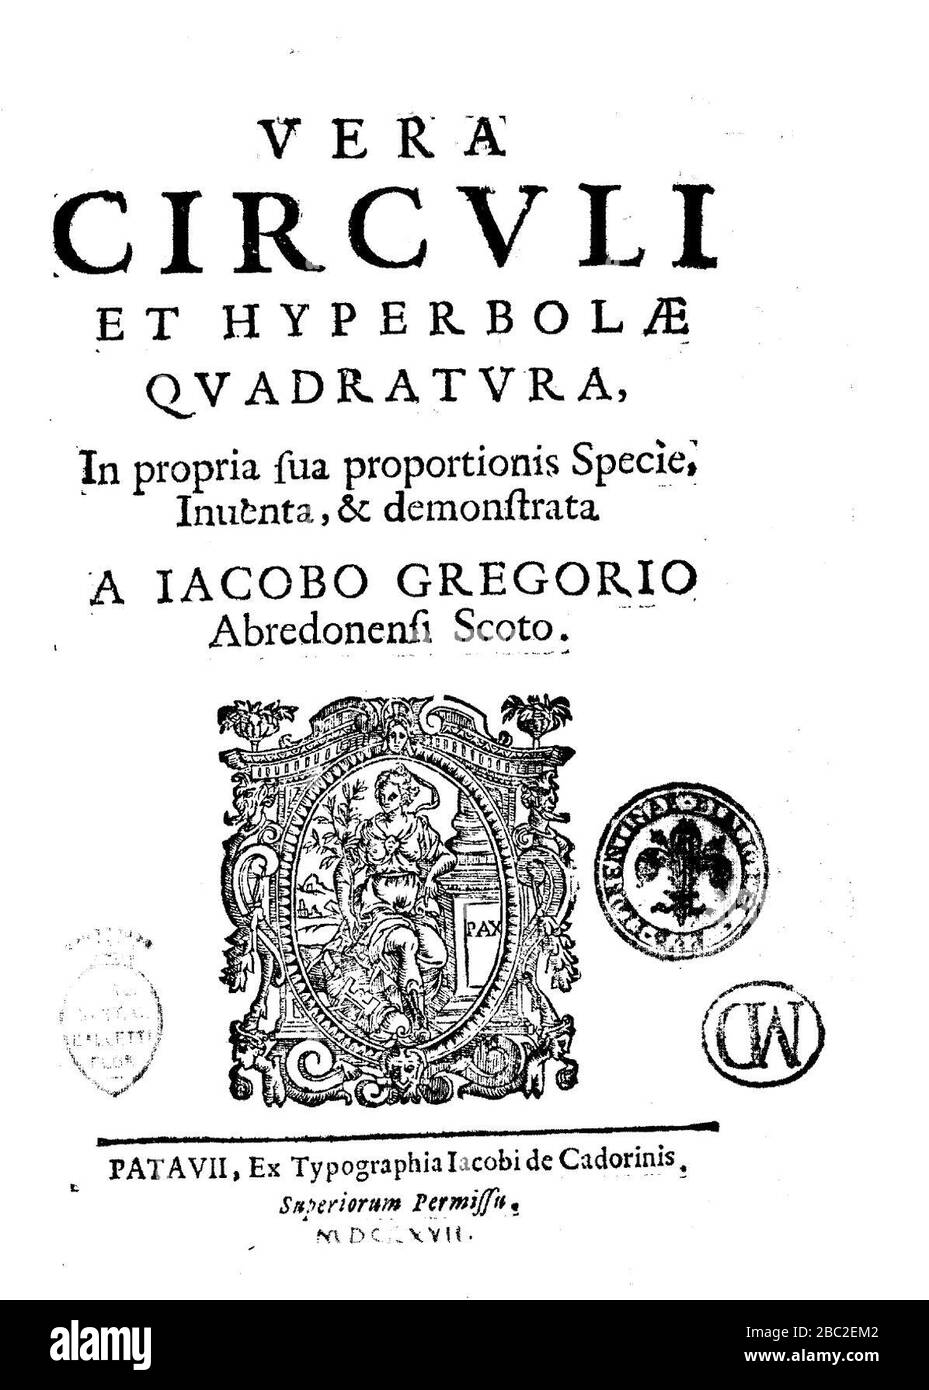 Gregory - Vera circuli et hyperbolae quadratura, in propria sua proportionis specie, inventa et demonstrata, 1667 - 878952. Stock Photo